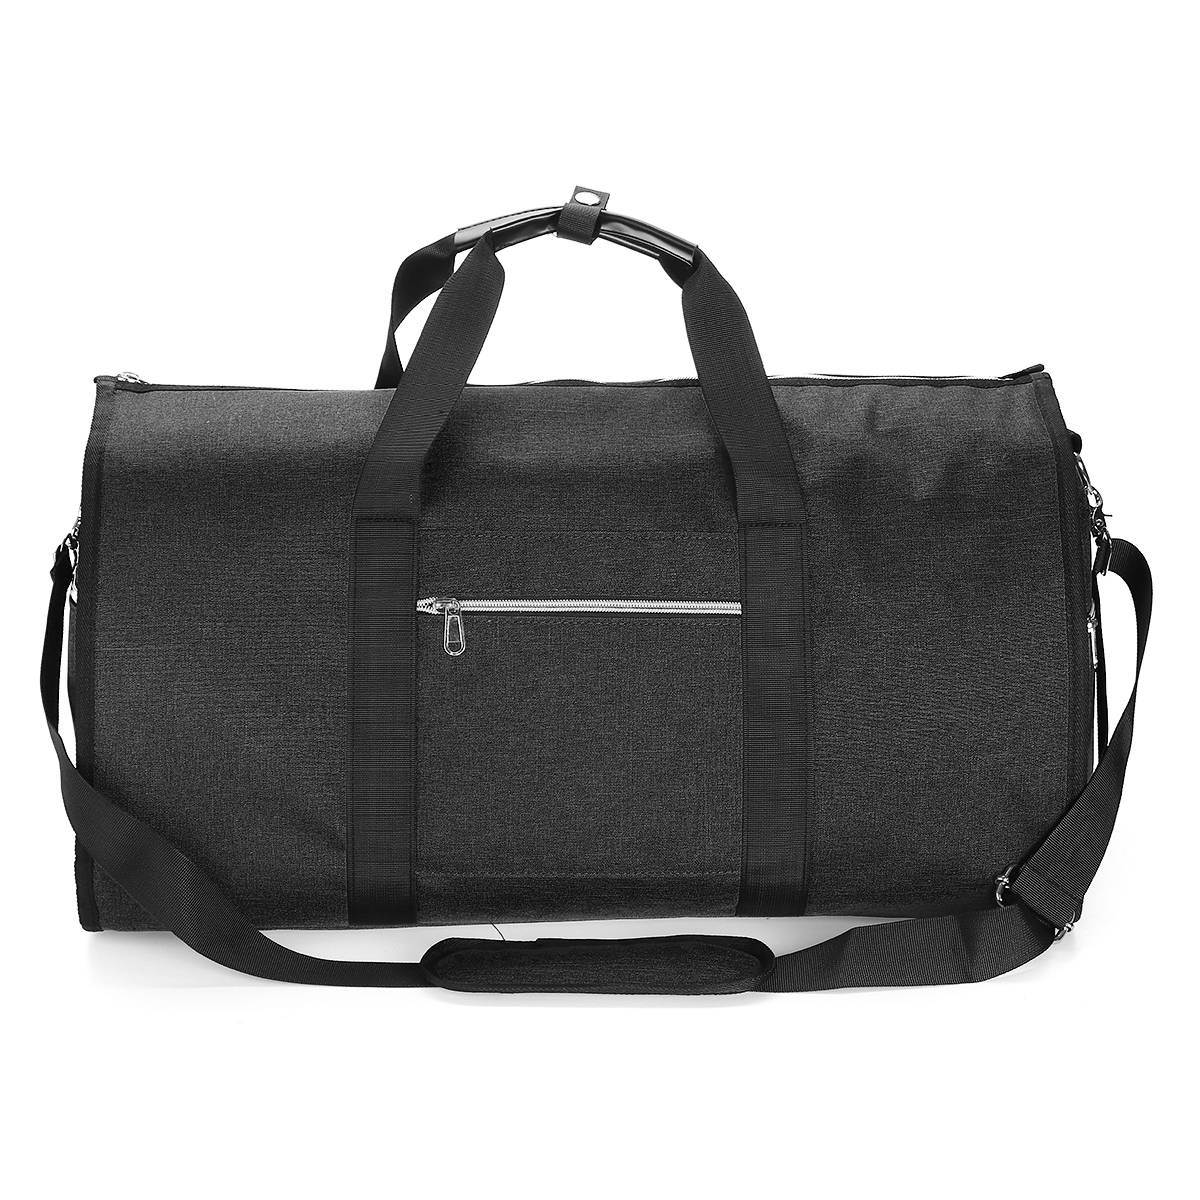 47L-Outdoor-Portable-Travel-Luggage-Bag-Suit-Dress-Garment-Storage-Handbag-Sports-Gym-Bag-1553950-8